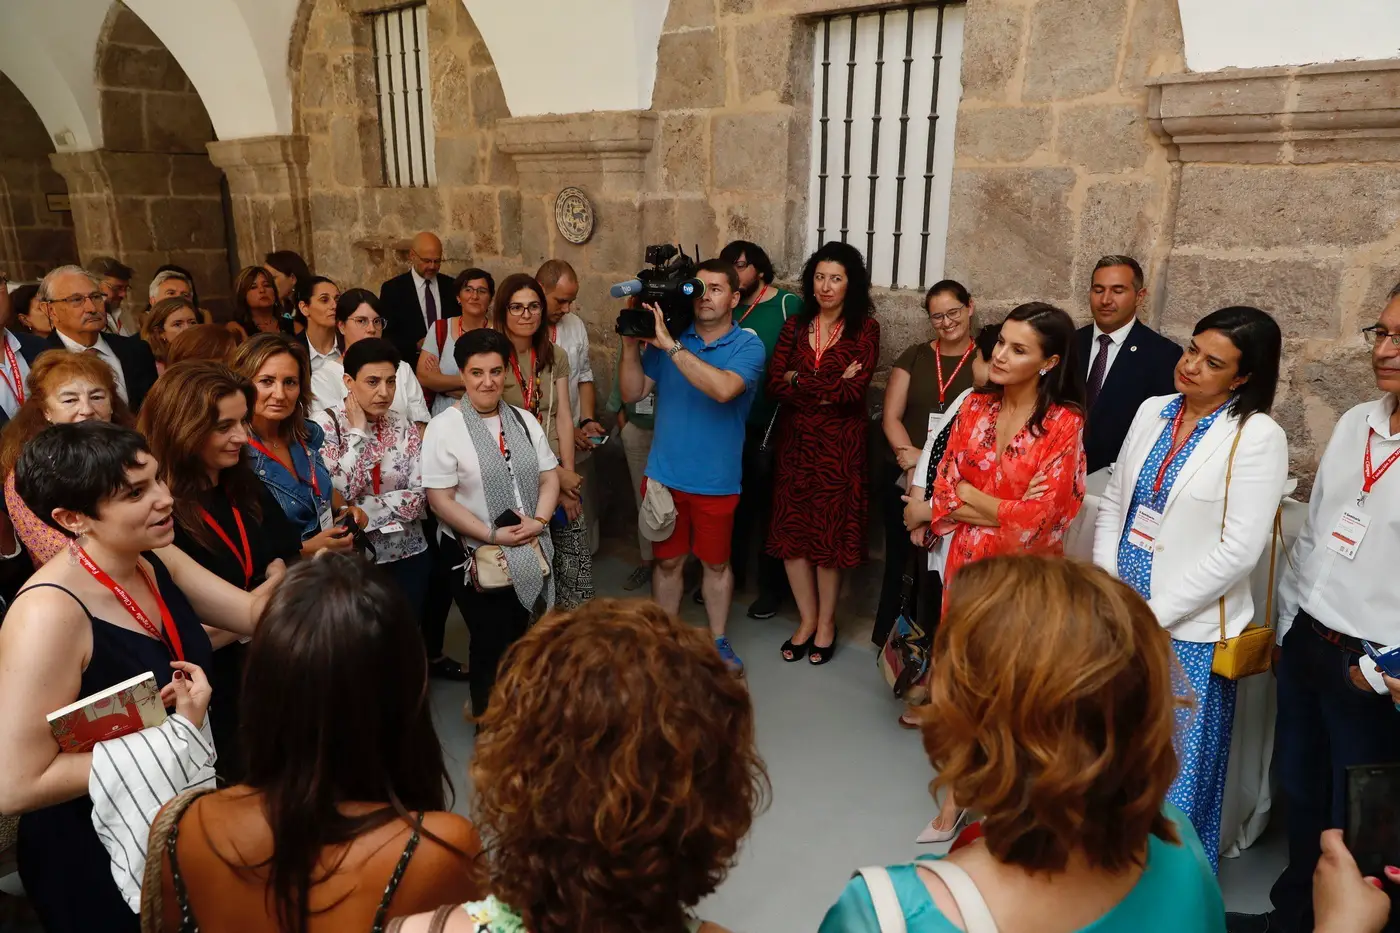 Queen Letizia in red Adolfo Dominguez Floral dress at Seminar Closing in Rioja